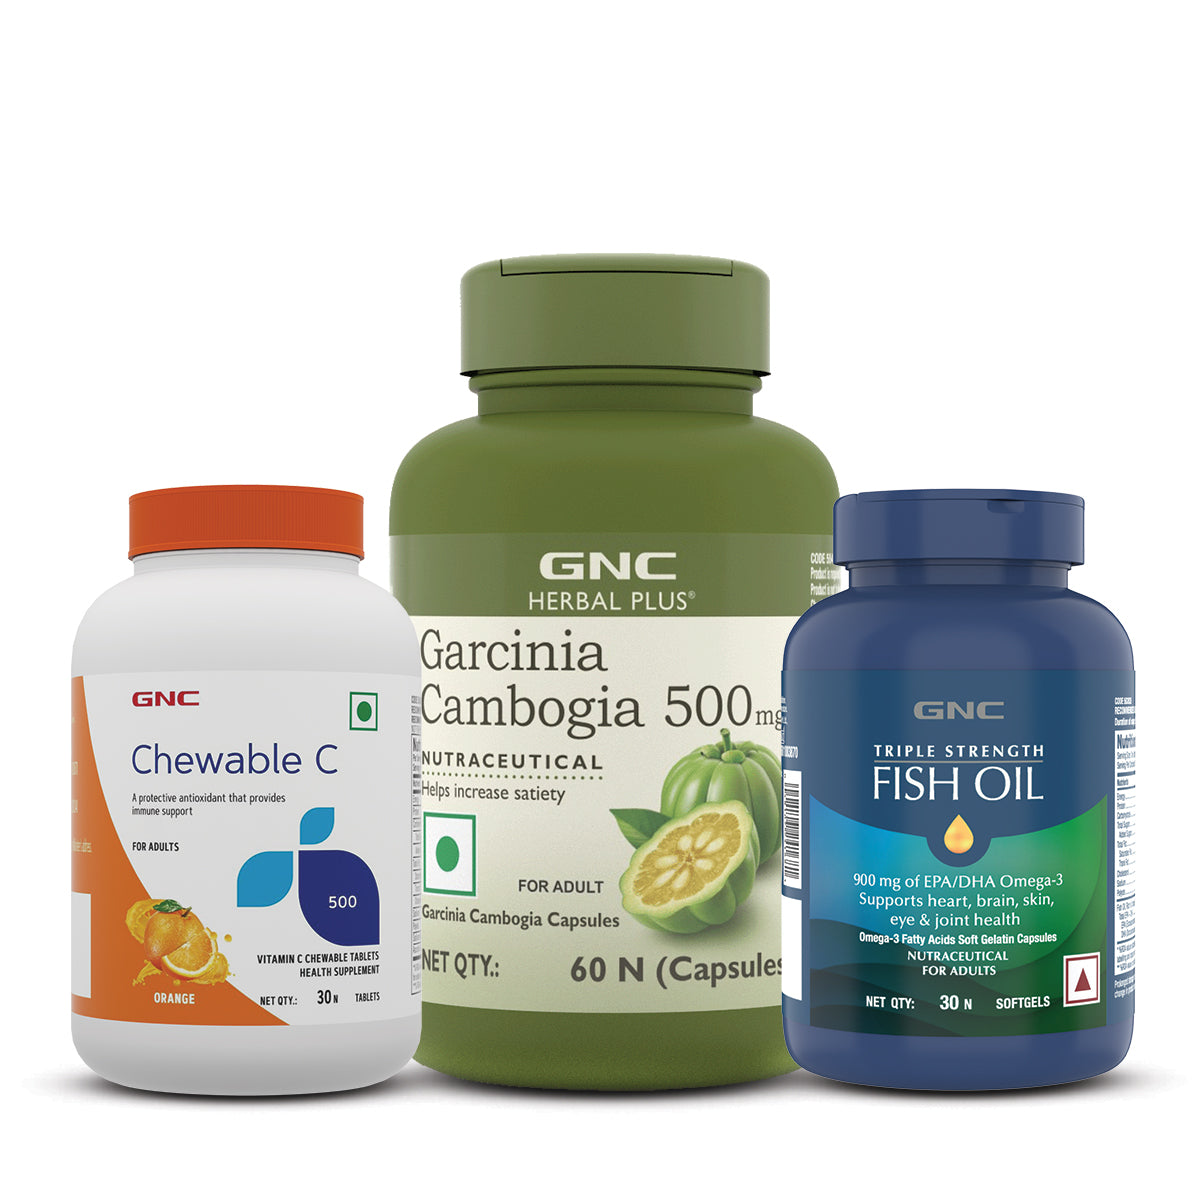 GNC Herbal Plus Garcinia Cambogia + Vitamin C Chewable Tablets + Triple Strength Fish Oil Omega 3 Capsules for Men & Women